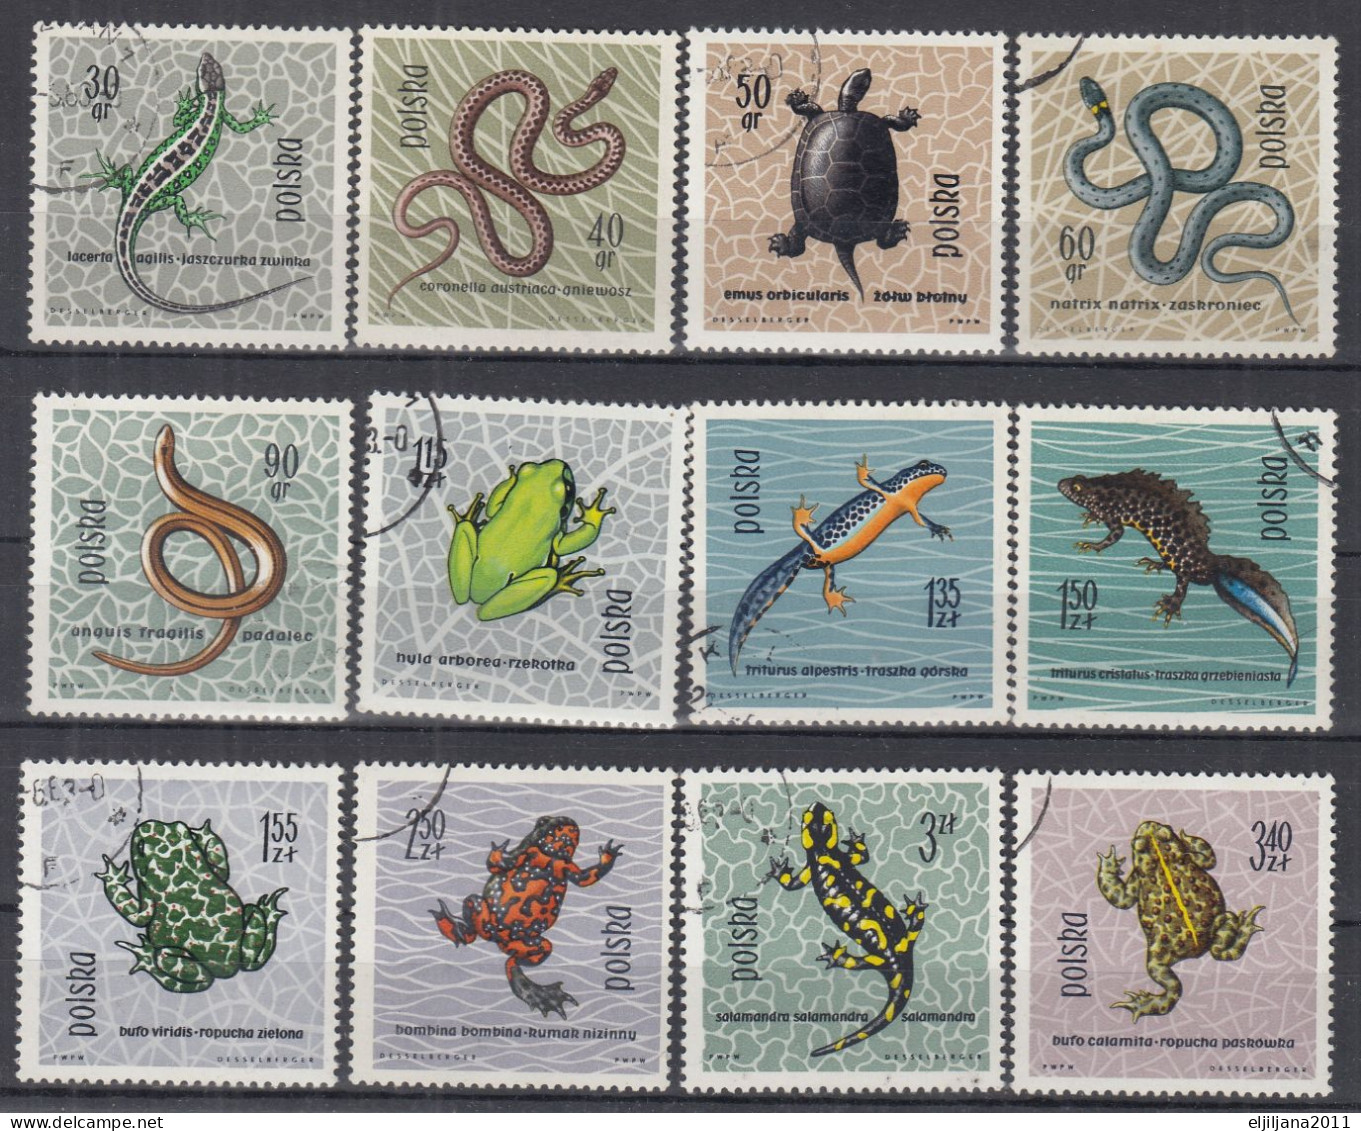 ⁕ Poland / Polska 1963 ⁕ Reptiles And Amphibians Mi.1393-1404 ⁕ 12v Used - Used Stamps